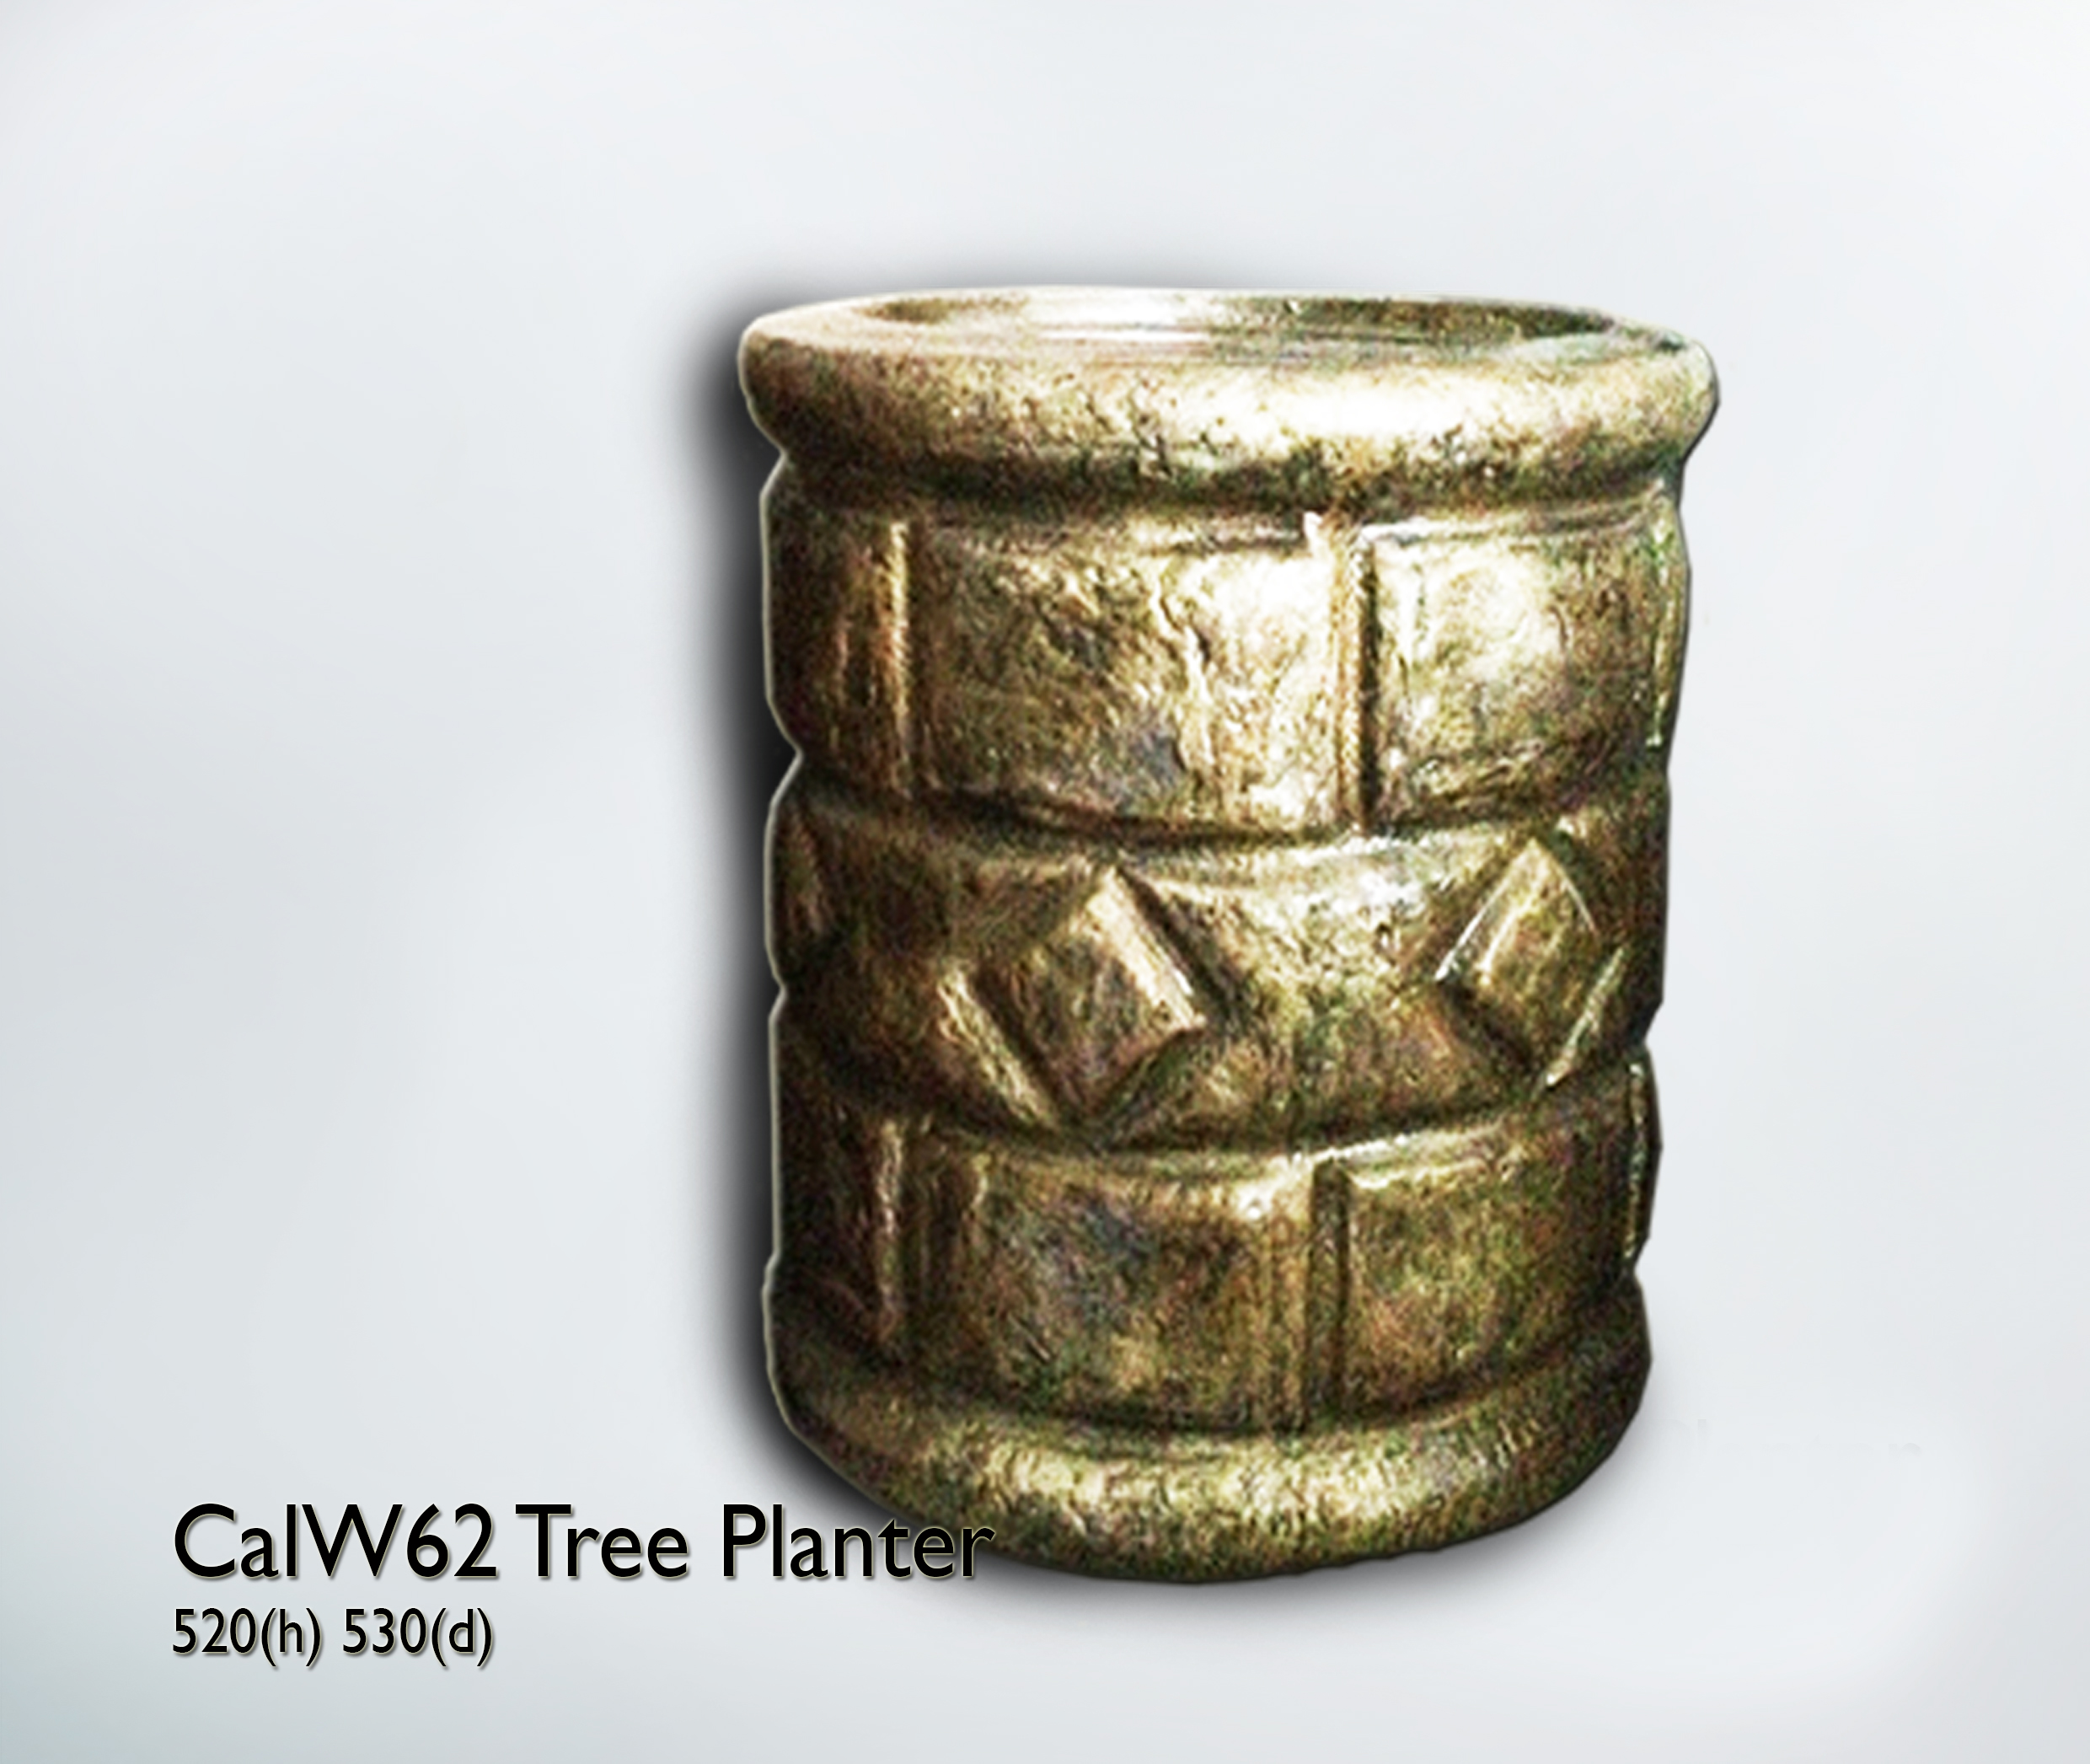 CalW62 Tree Planter